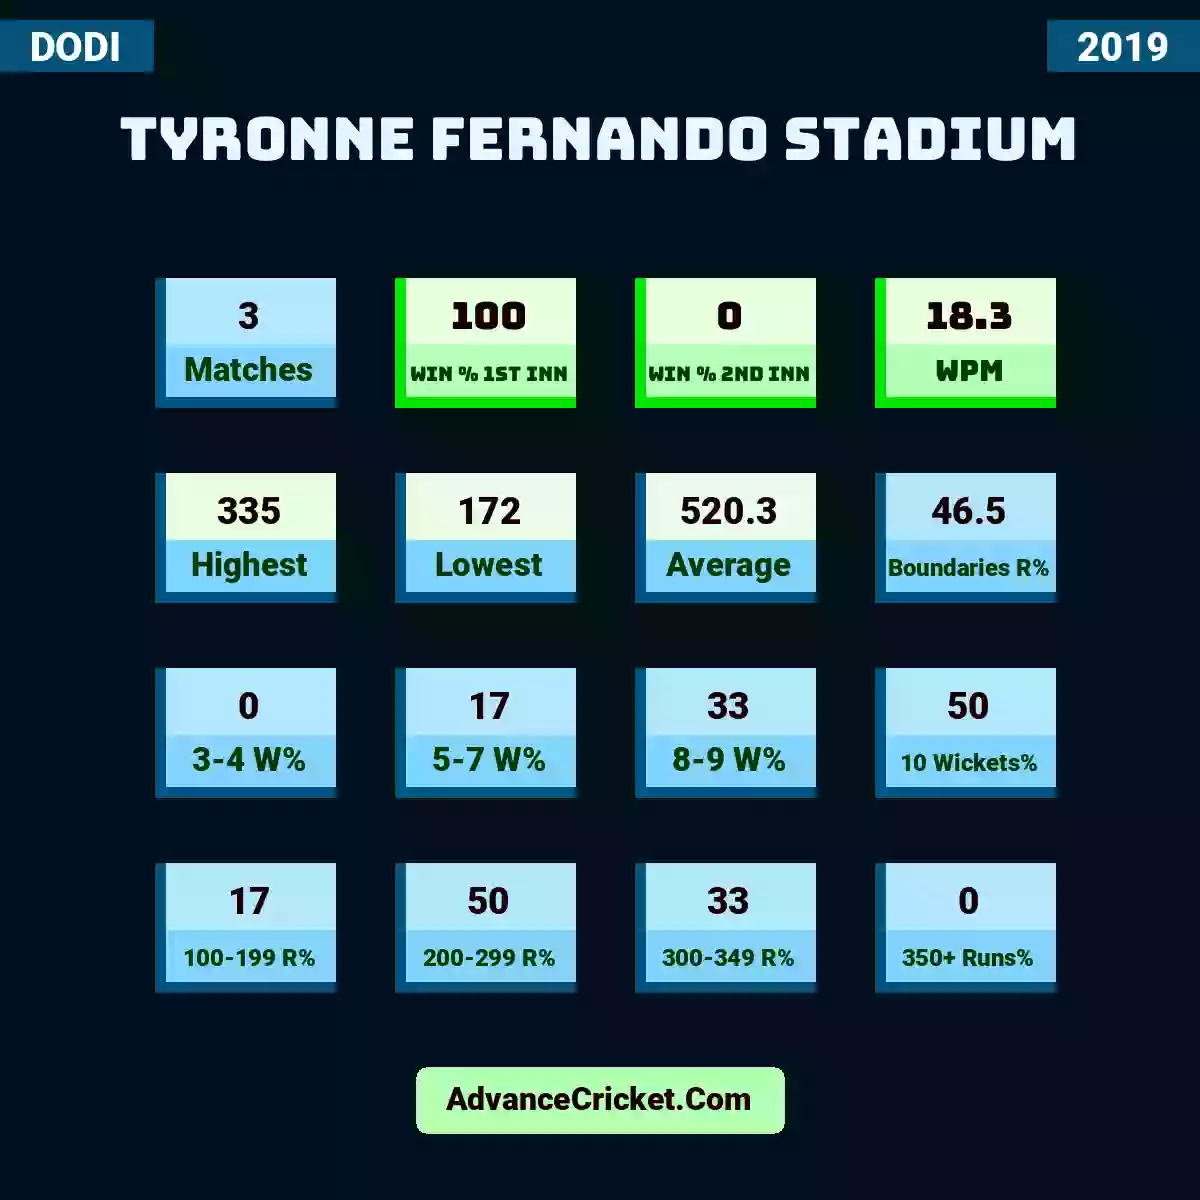 Image showing Tyronne Fernando Stadium with Matches: 3, Win % 1st Inn: 100, Win % 2nd Inn: 0, WPM: 18.3, Highest: 335, Lowest: 172, Average: 520.3, Boundaries R%: 46.5, 3-4 W%: 0, 5-7 W%: 17, 8-9 W%: 33, 10 Wickets%: 50, 100-199 R%: 17, 200-299 R%: 50, 300-349 R%: 33, 350+ Runs%: 0.